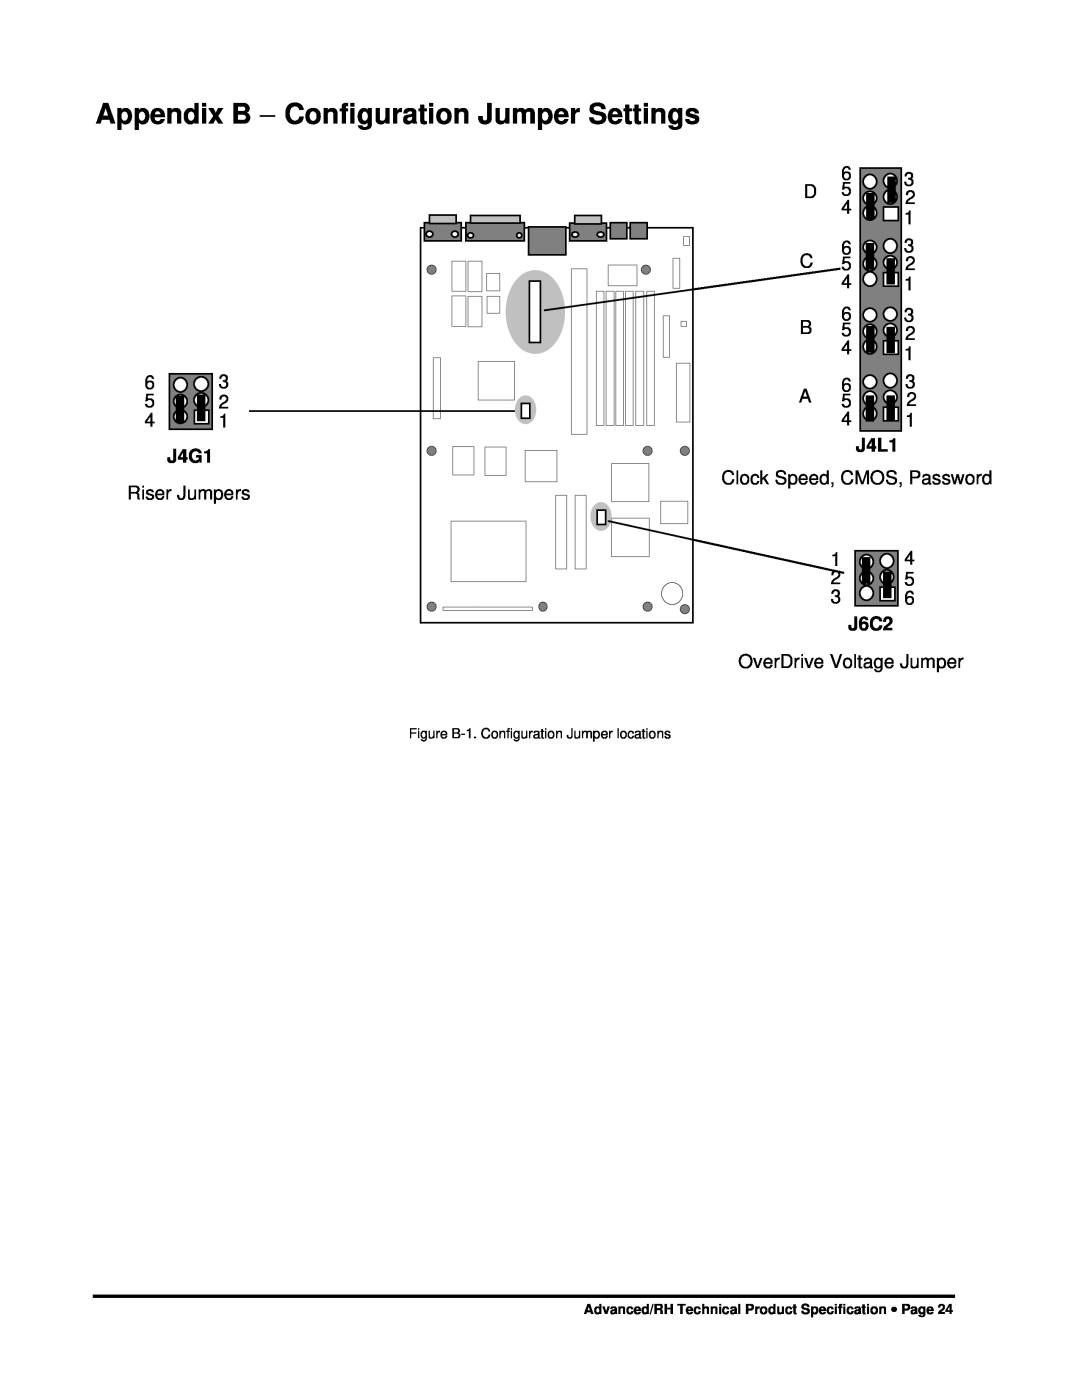 Intel 281809-003 manual Appendix B − Configuration Jumper Settings, J4G1, J4L1, J6C2 